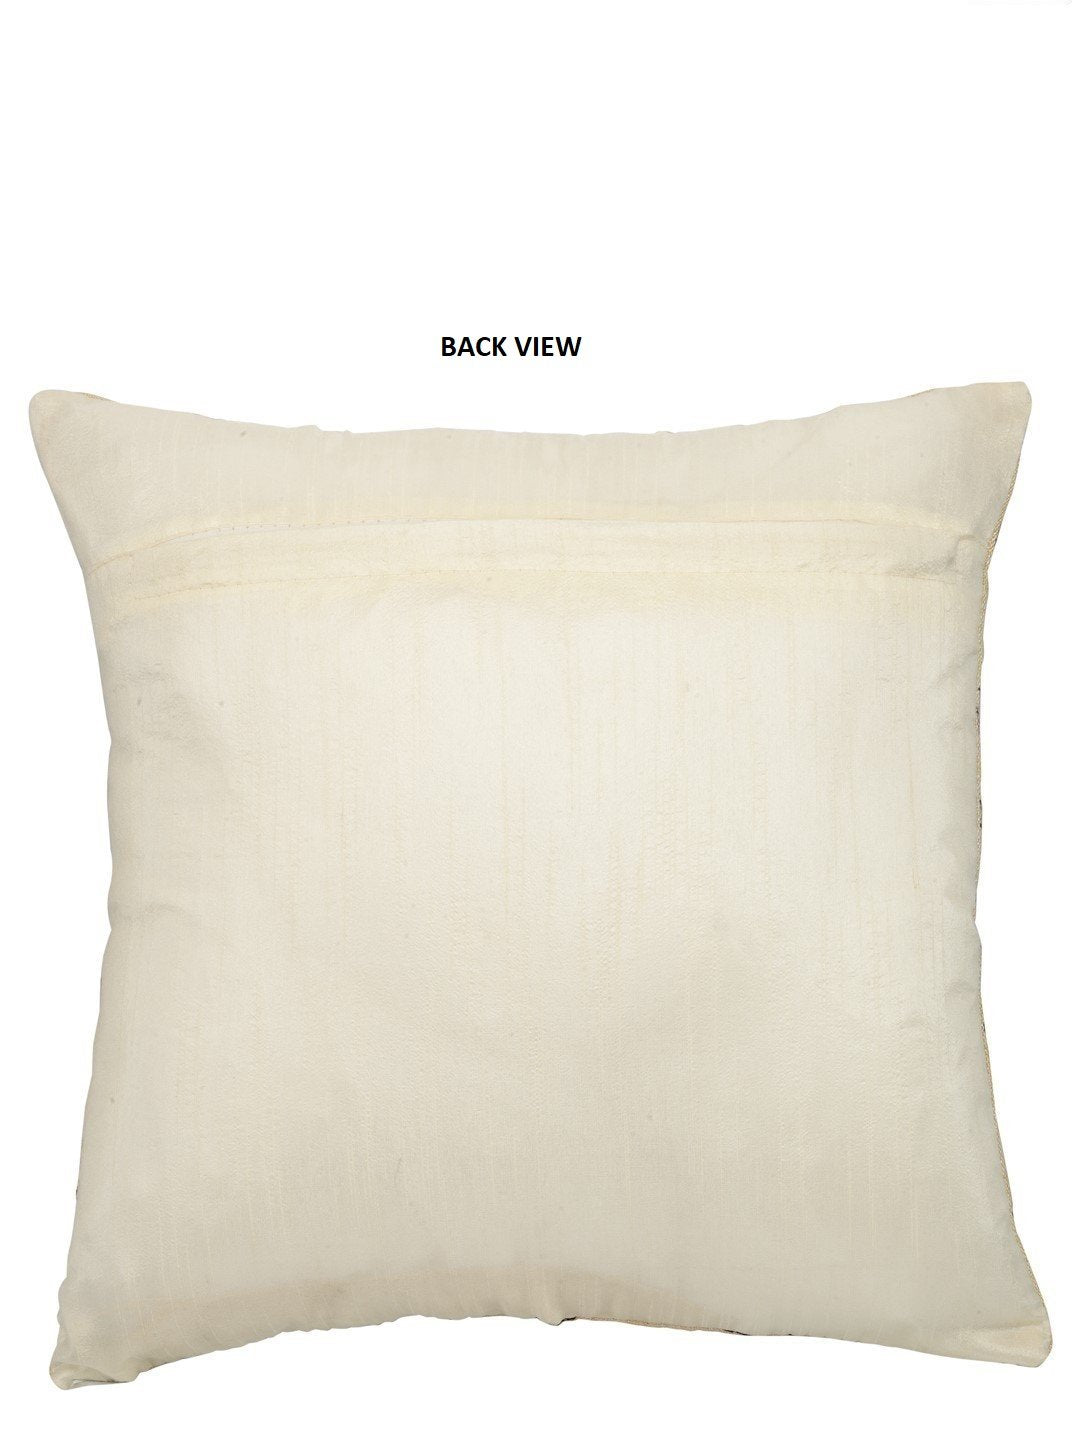 Cushion Covers: Set of 5 Jute Throw/Pillow Cushion Covers